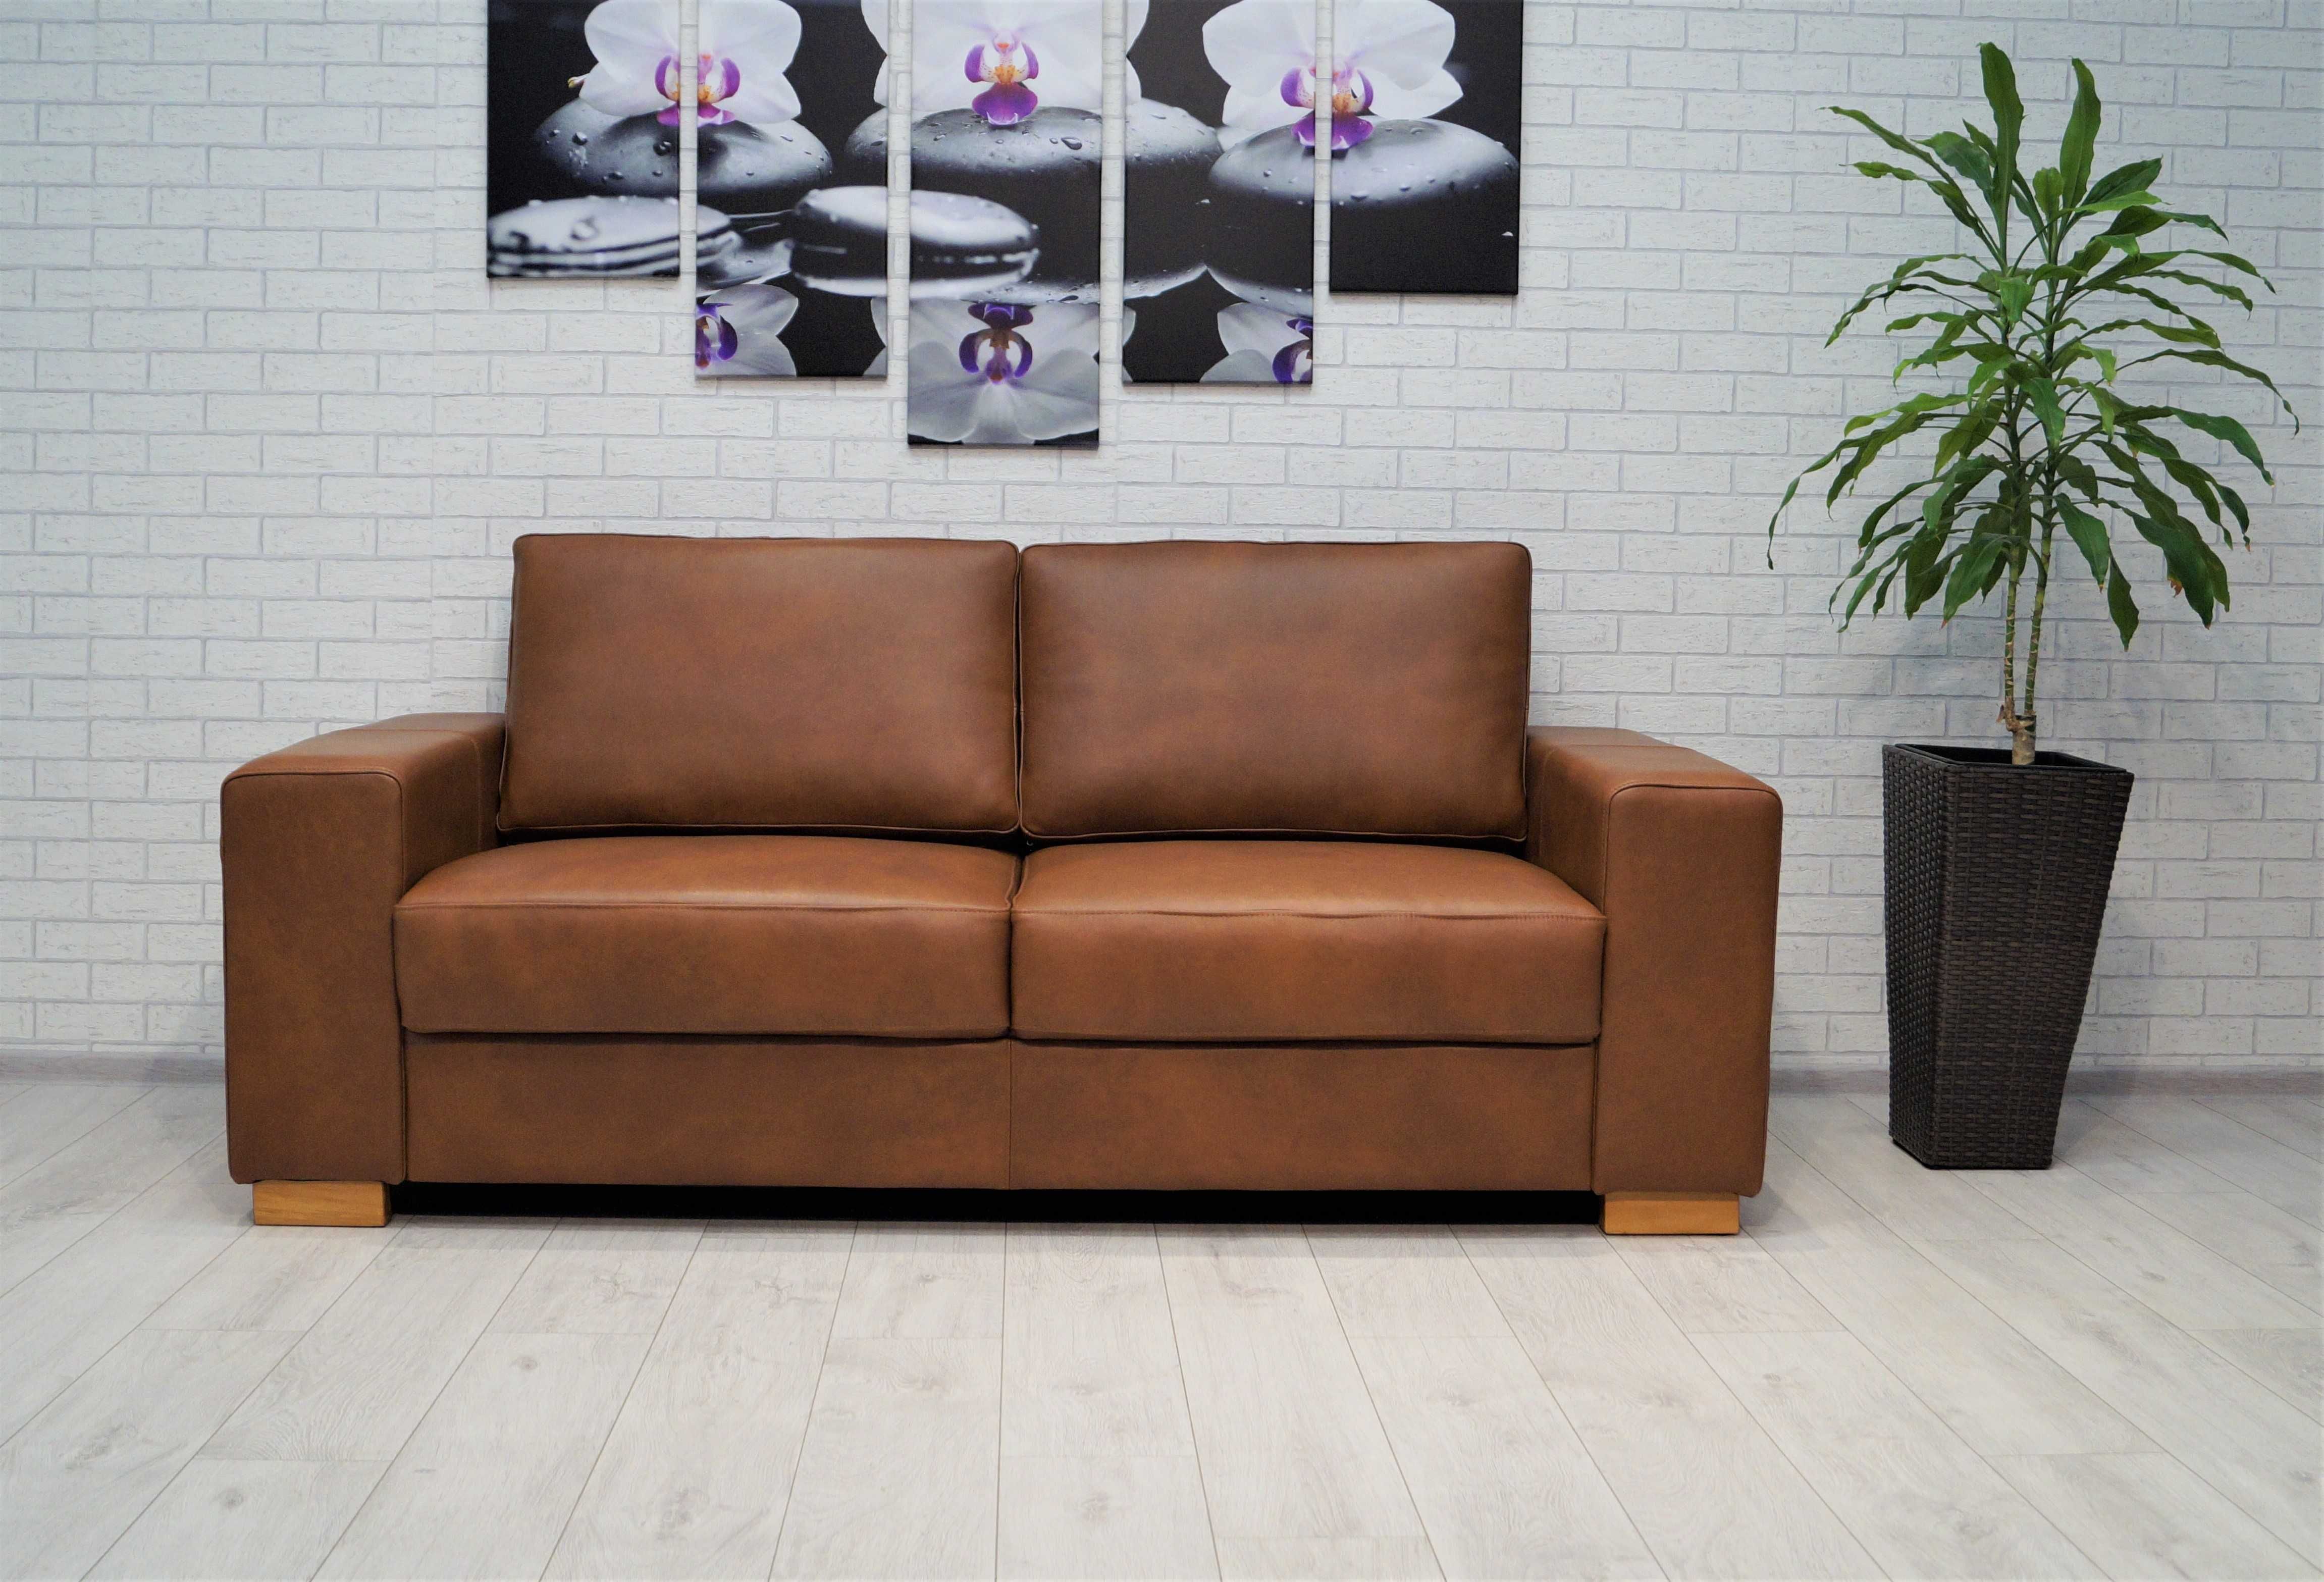 Zestaw skórzany California sofa 190cm + fotel, skóra, PRODUCENT